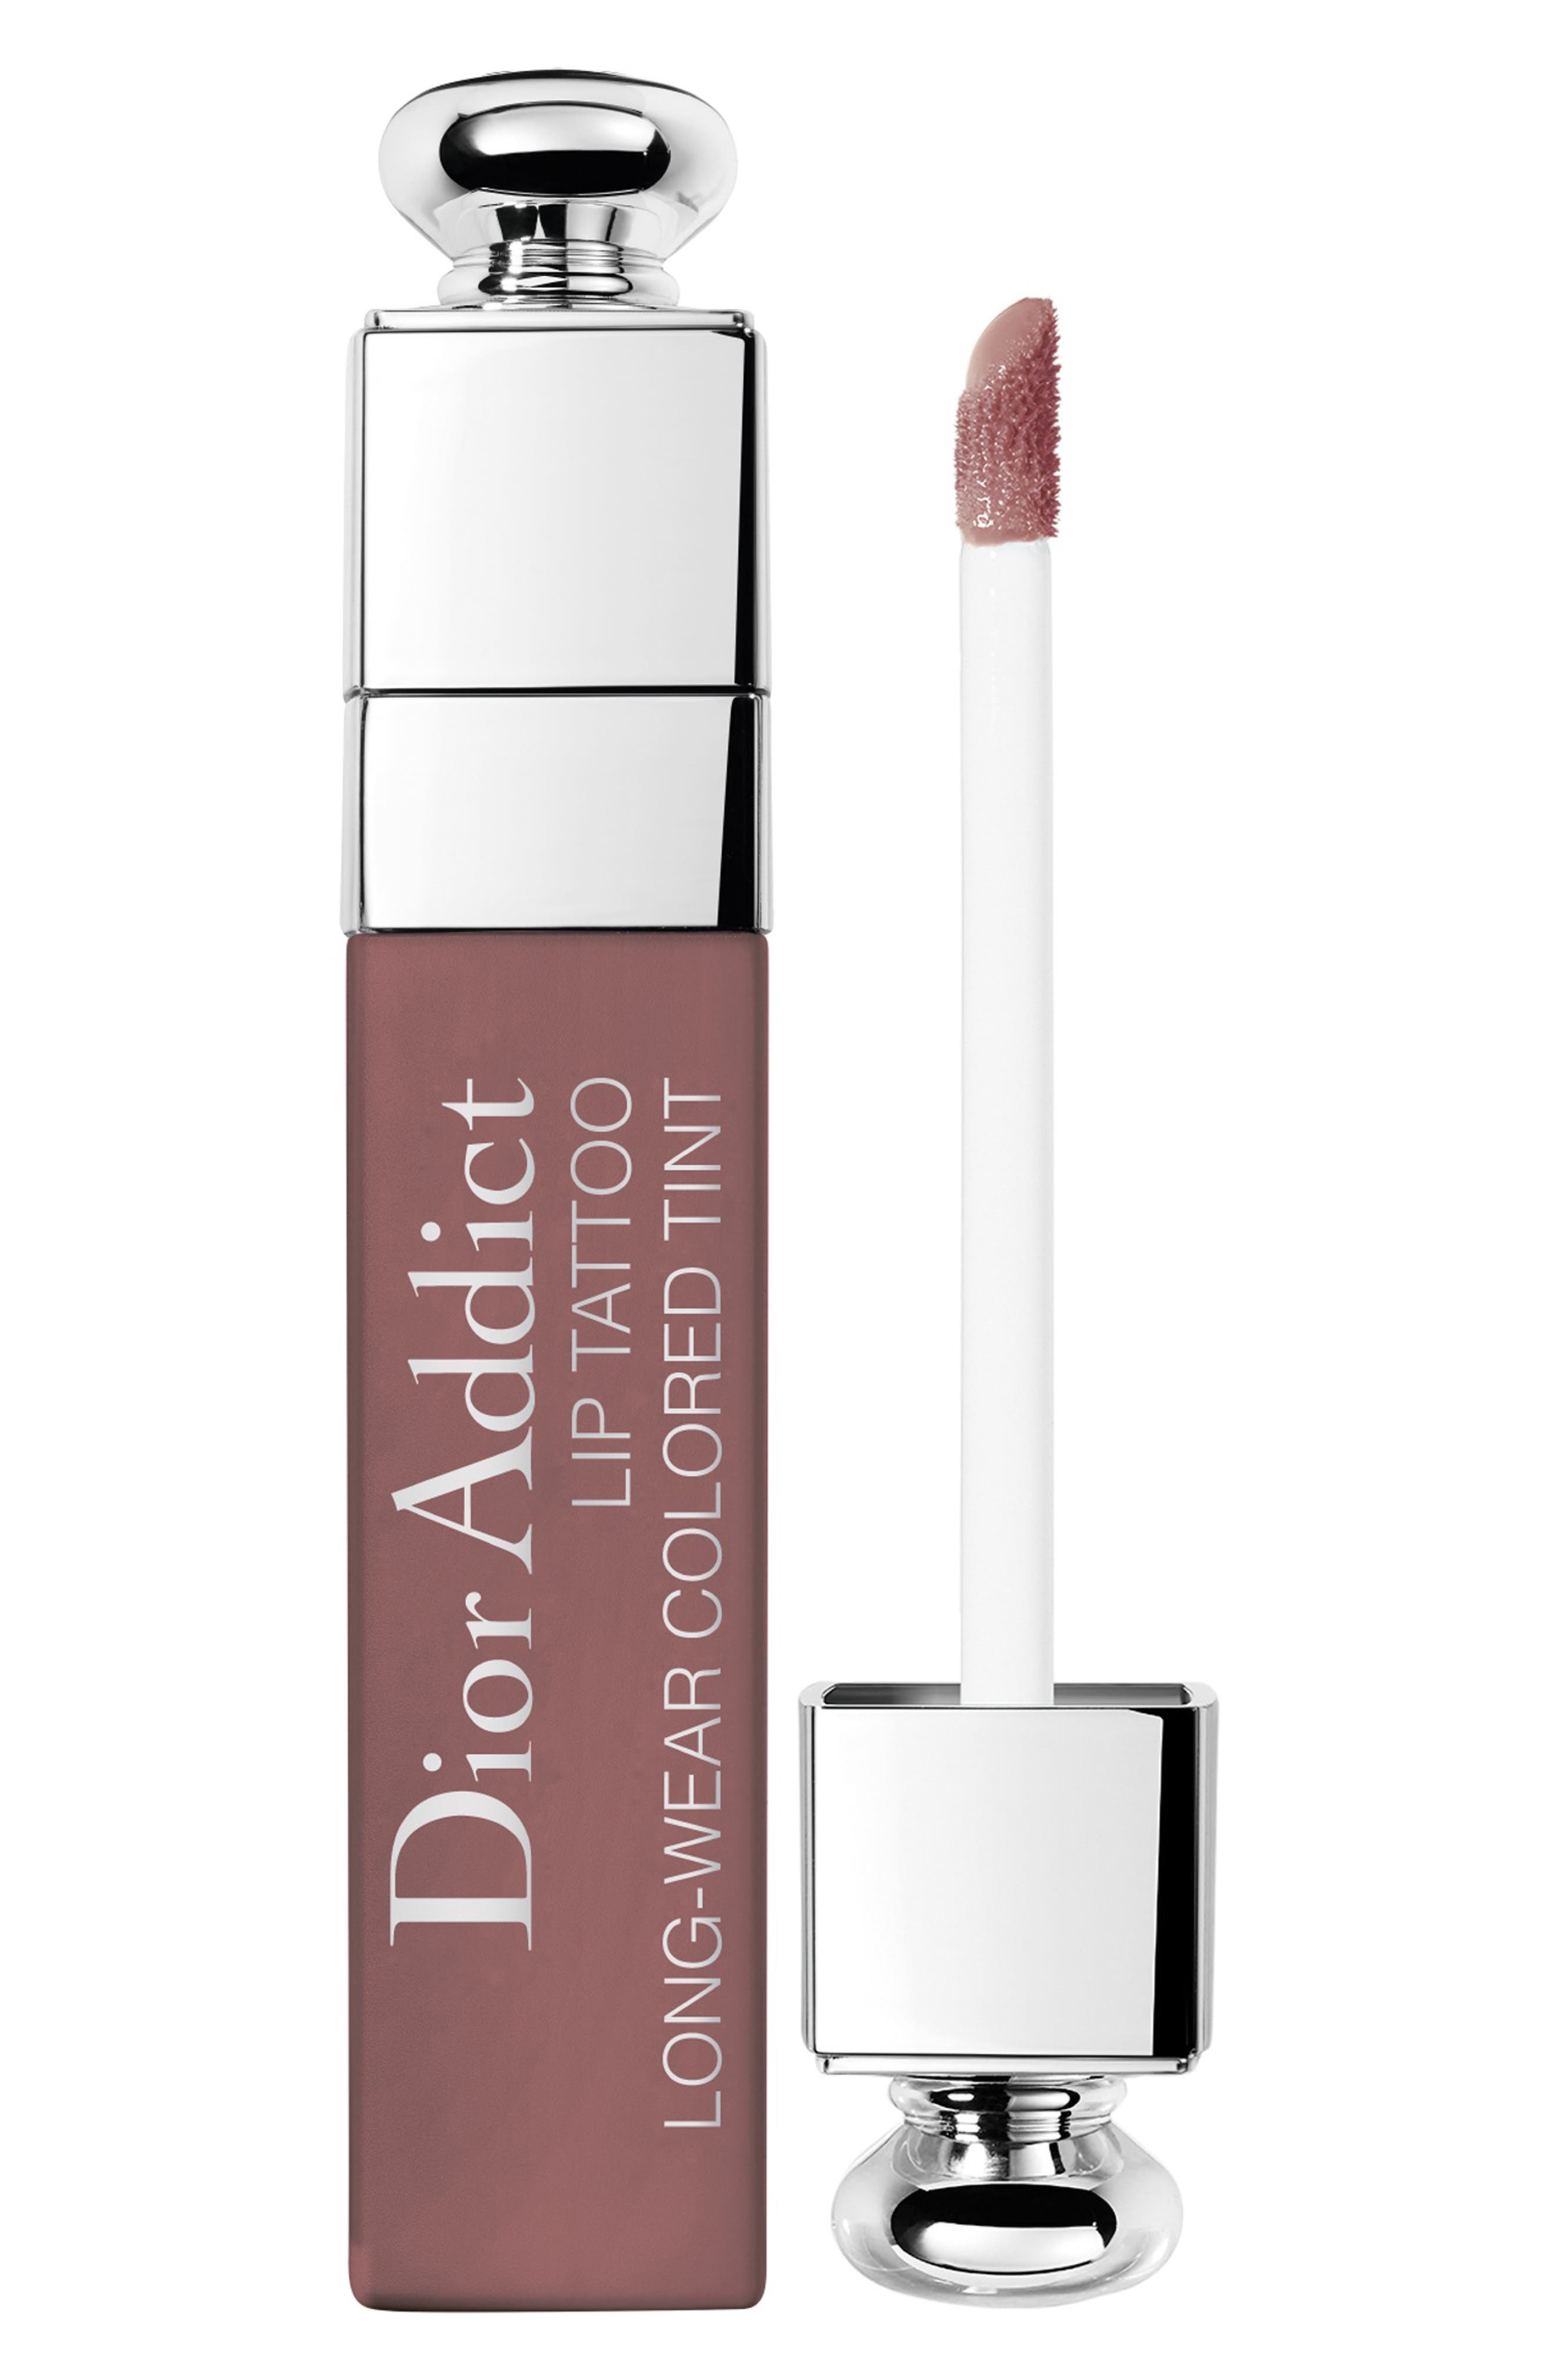 nordstrom dior lipstick